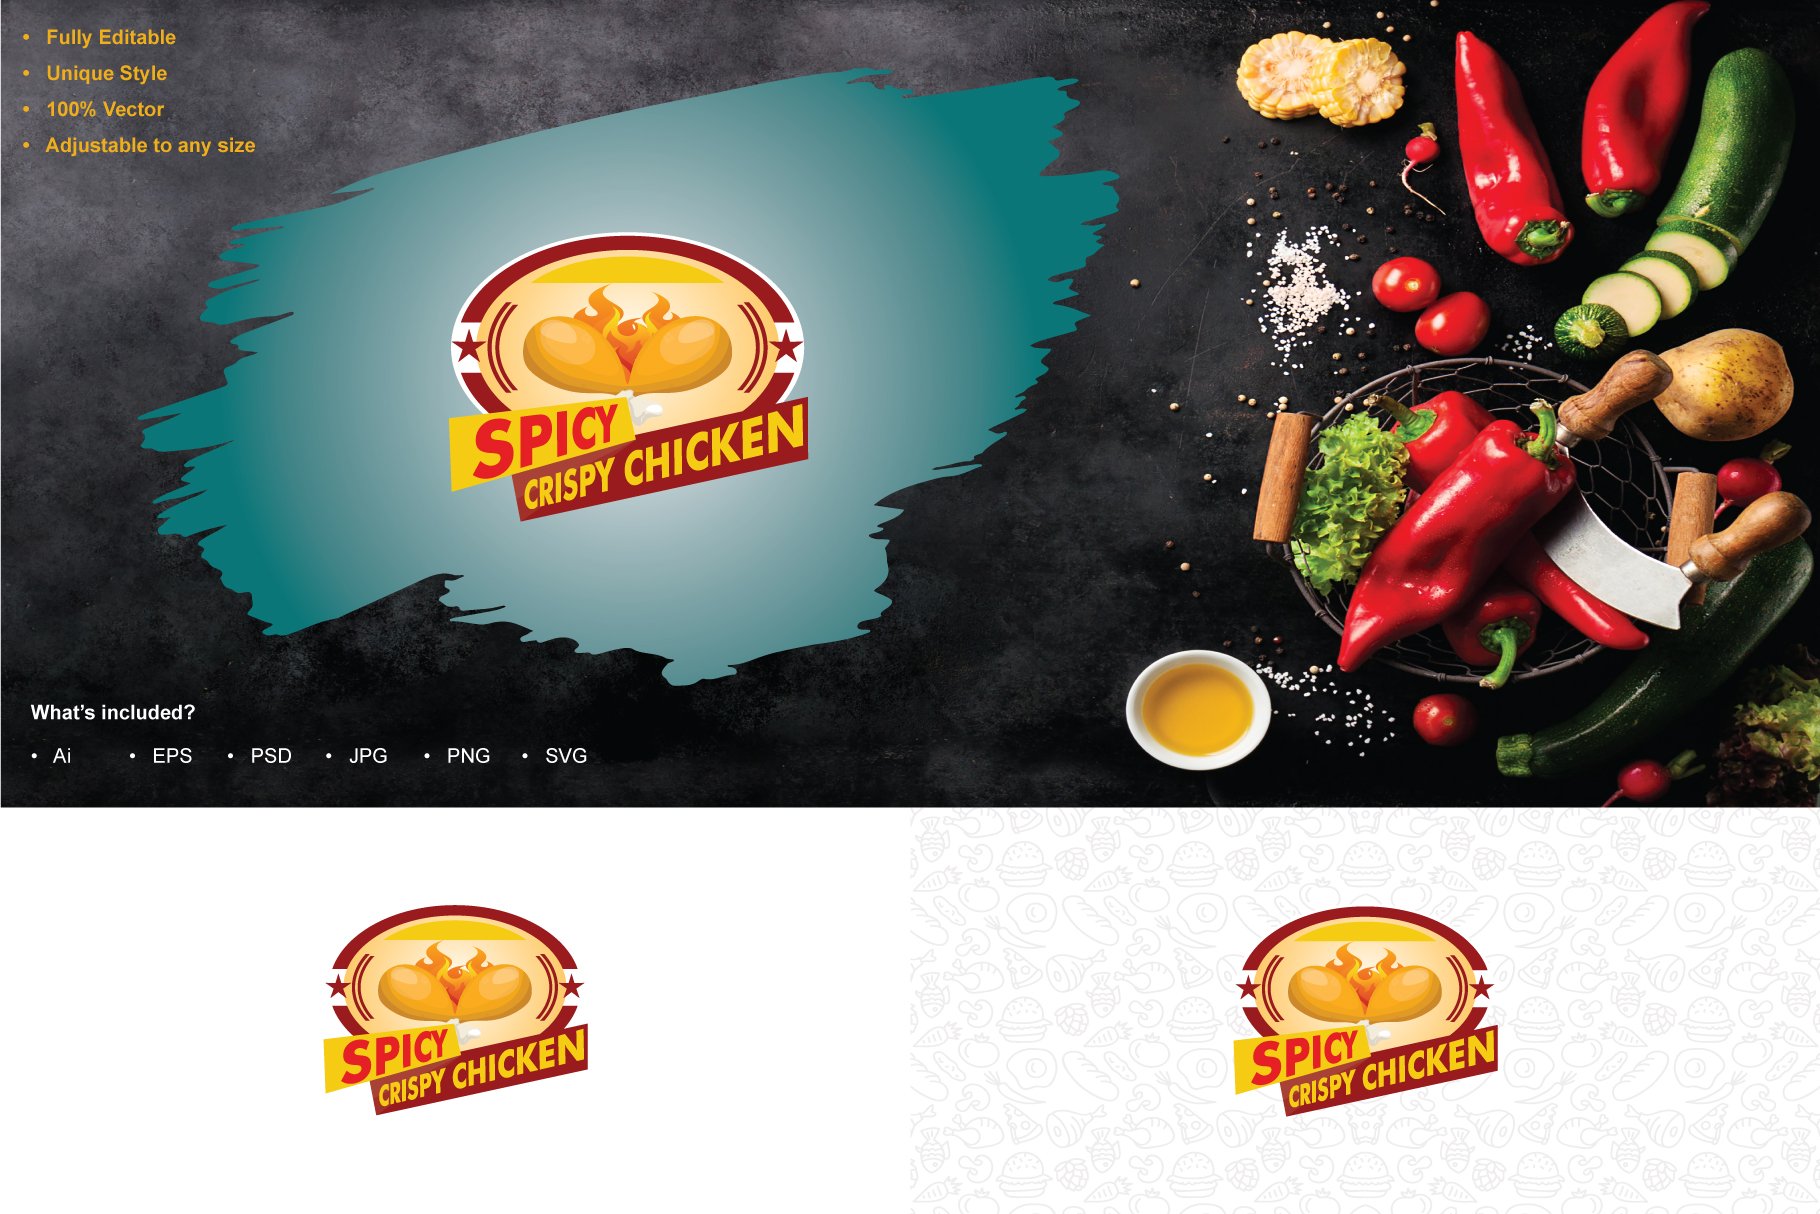 Spicy Crispy Chicken Logo cover image.